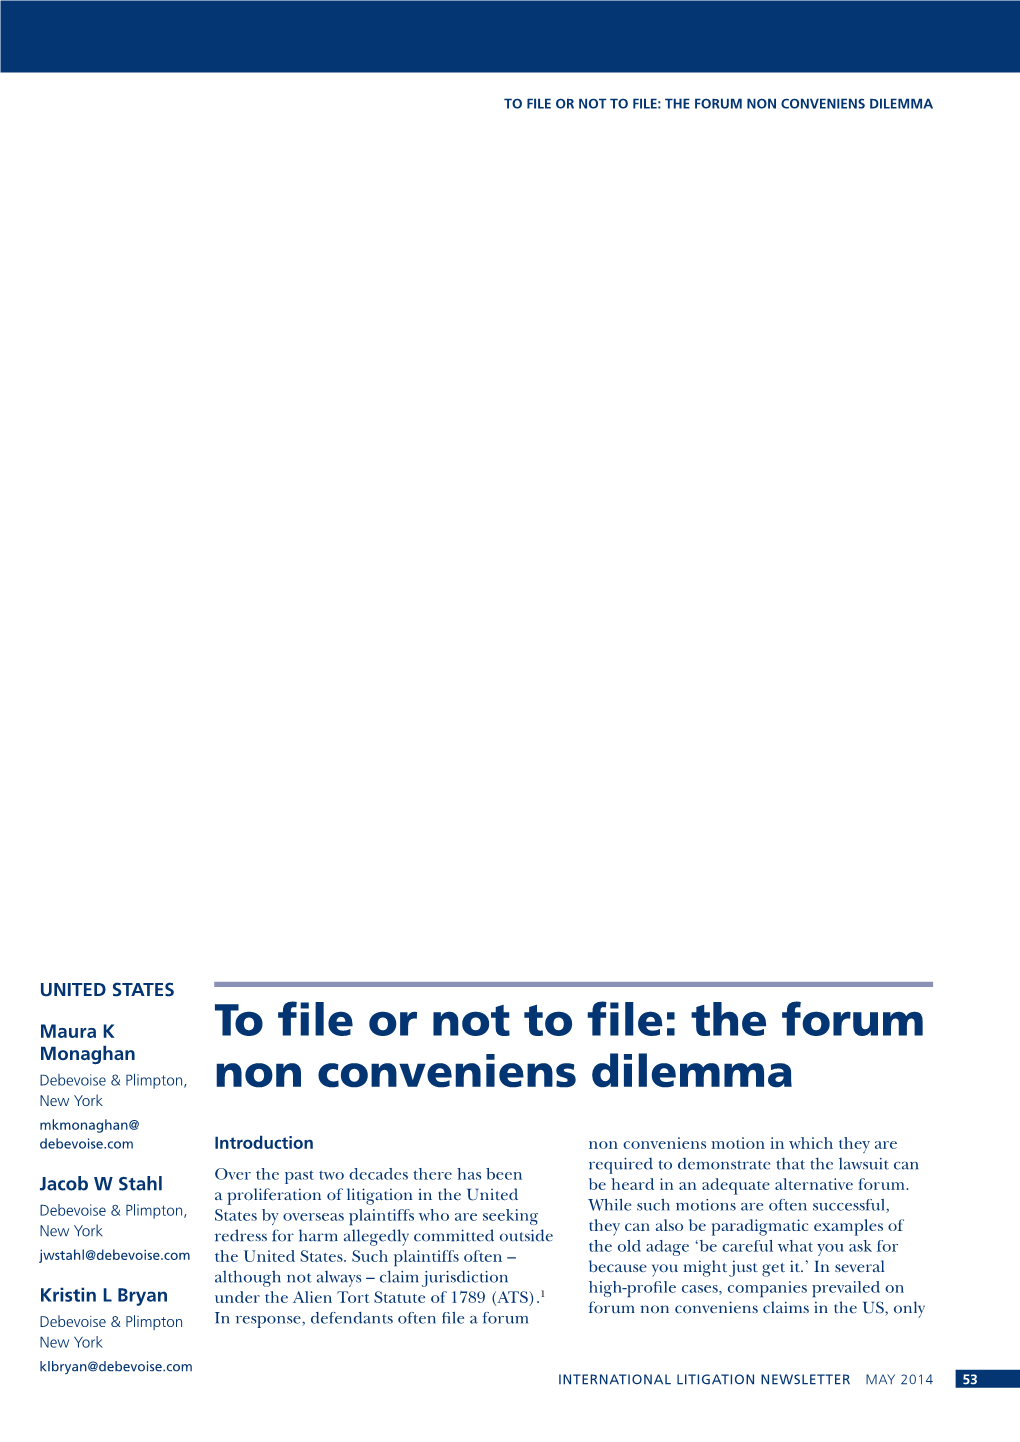 The Forum Non Conveniens Dilemma